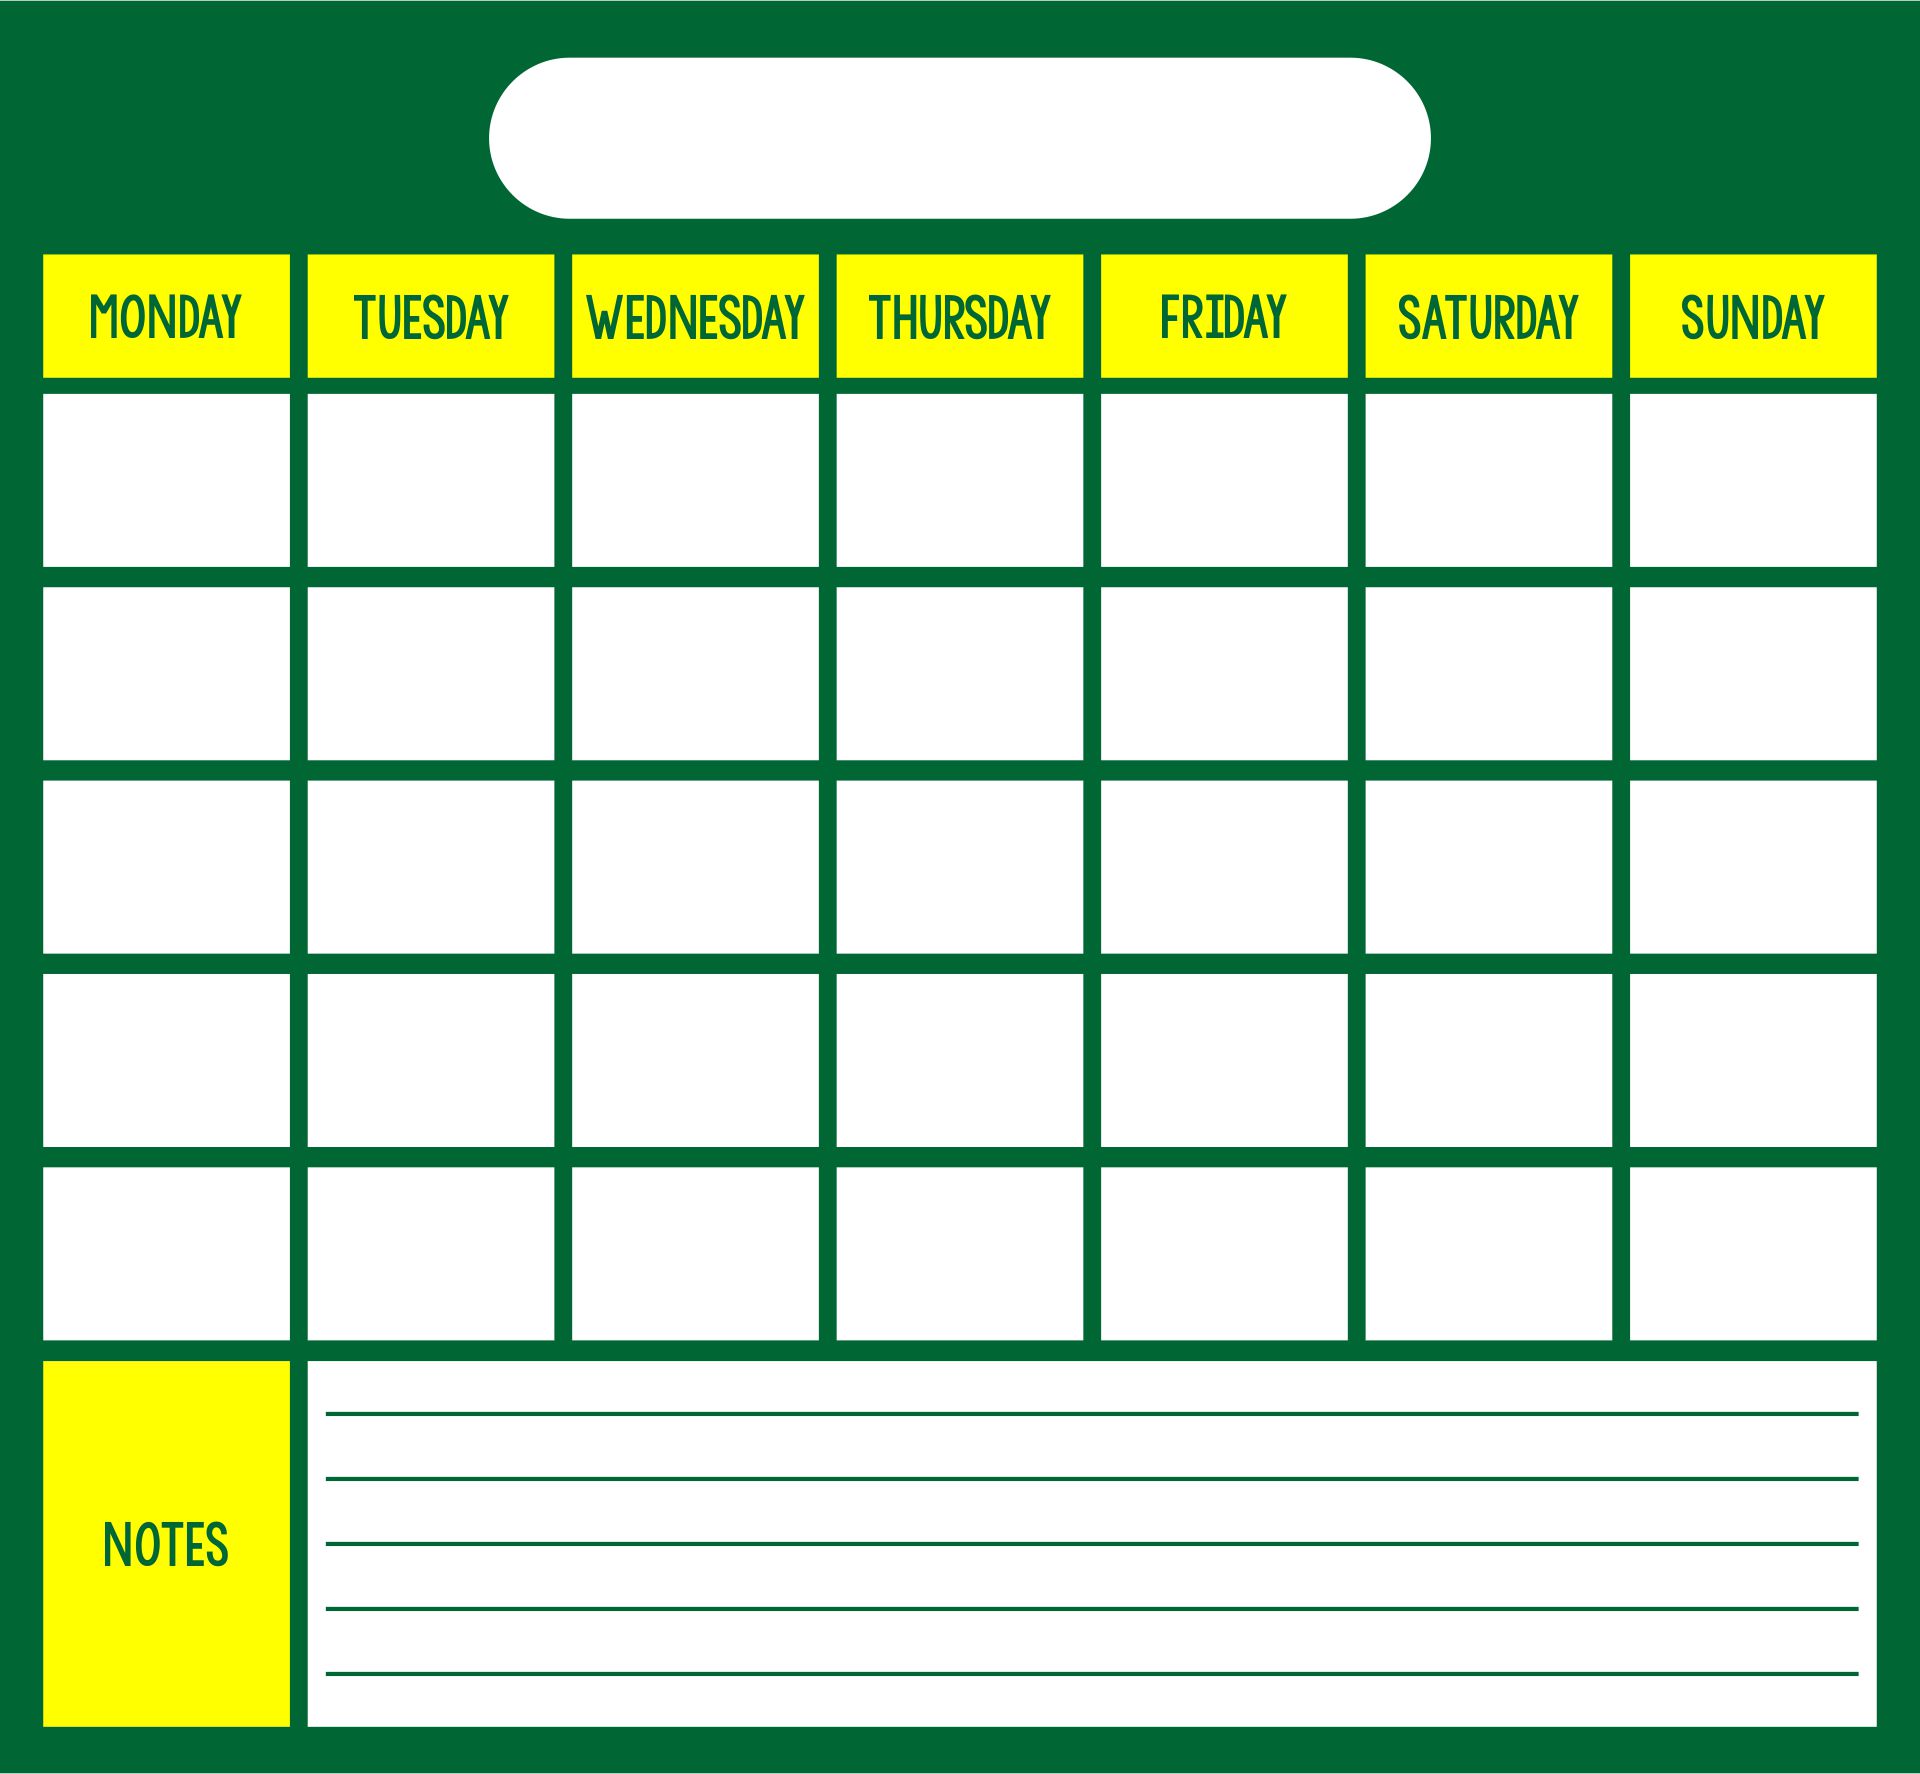 Free Printable Calendar Templates